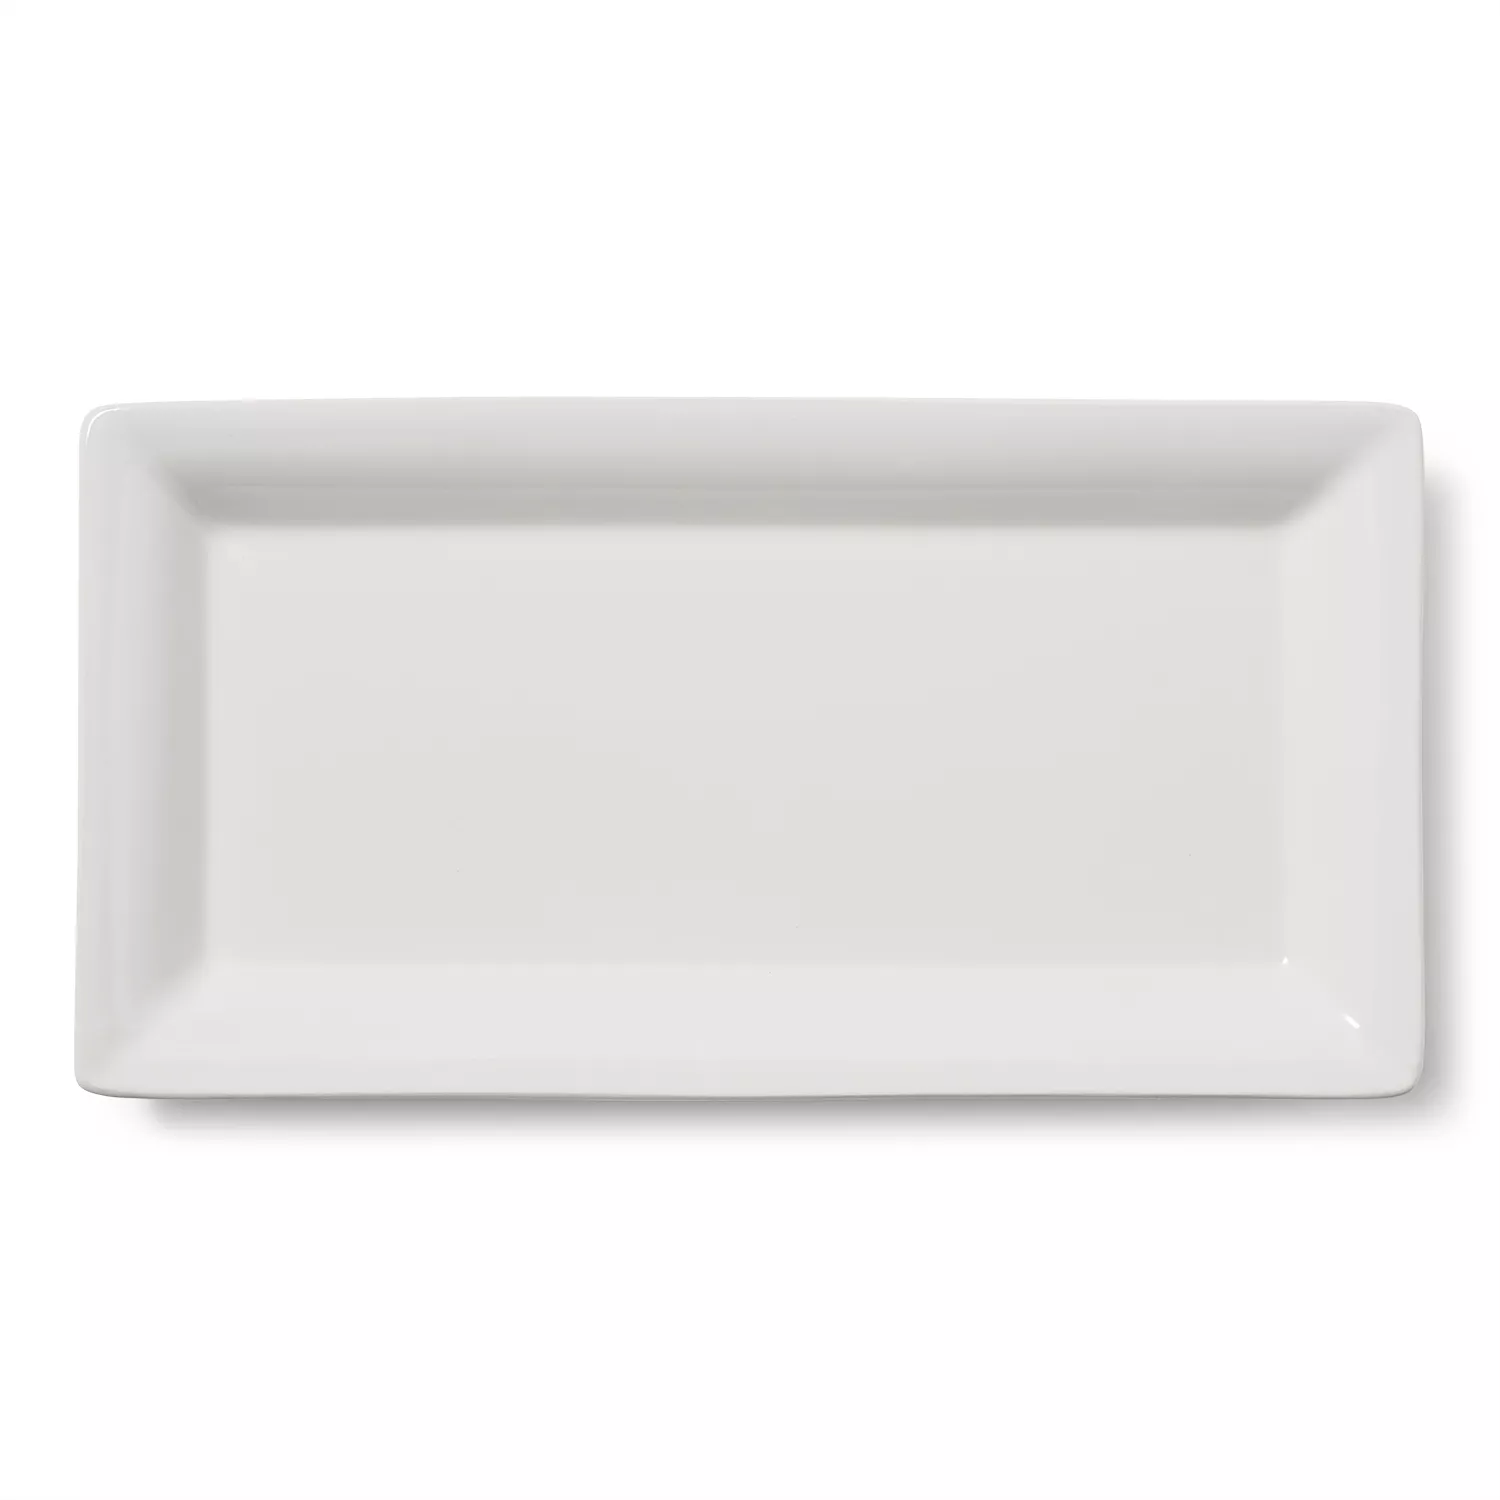 Sur La Table White Rectangular Platter, 17.75"